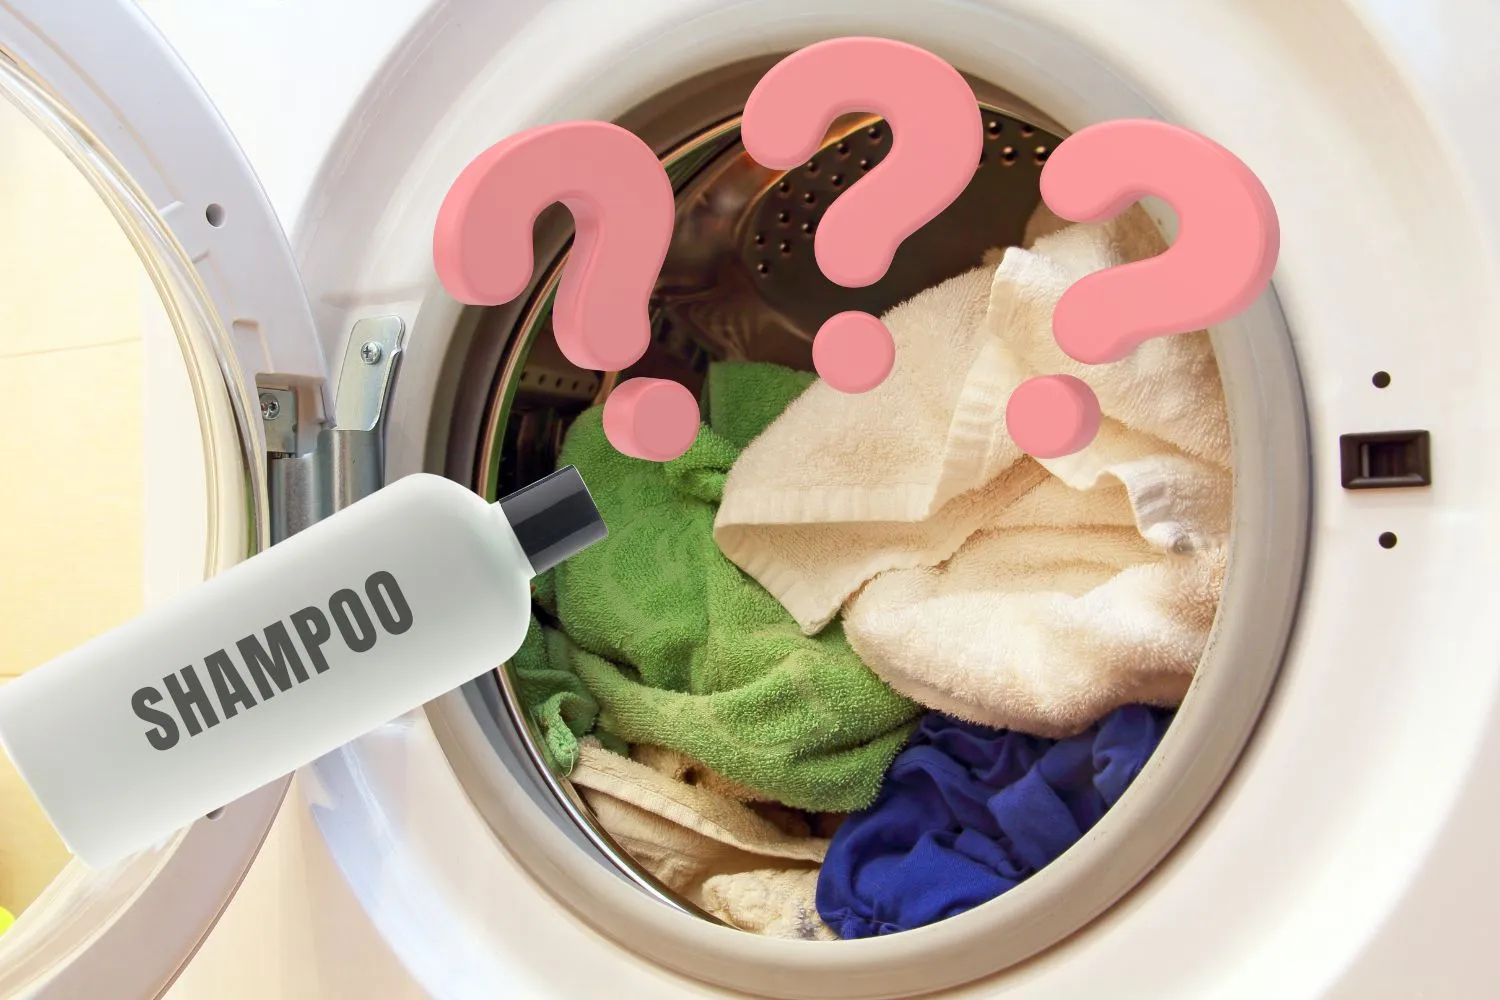 Can I Use Shampoo To Wash Clothes?